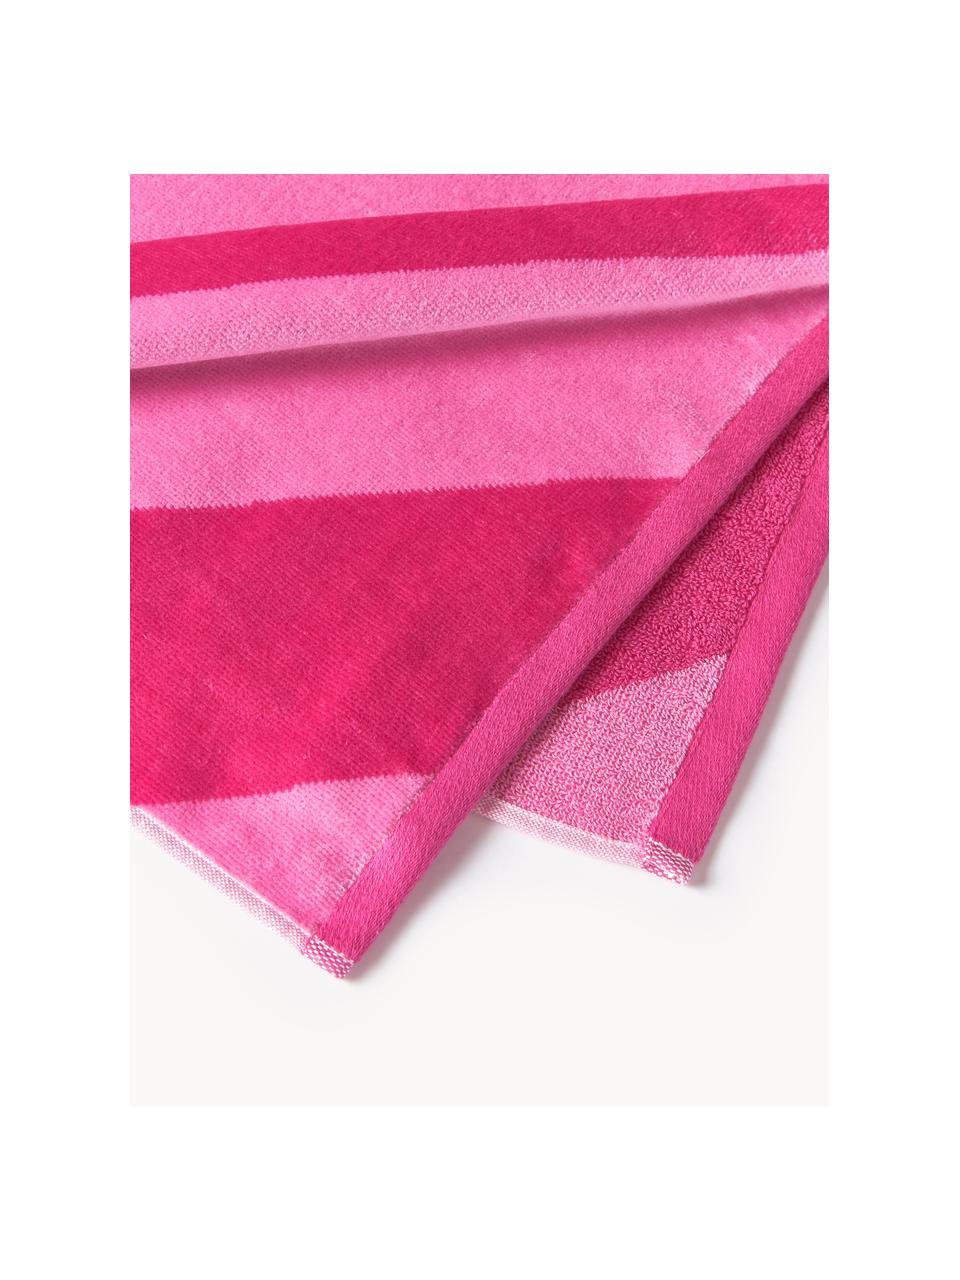 Strandtuch Suri mit Zickzack-Muster, Pink, B 90 x L 170 cm